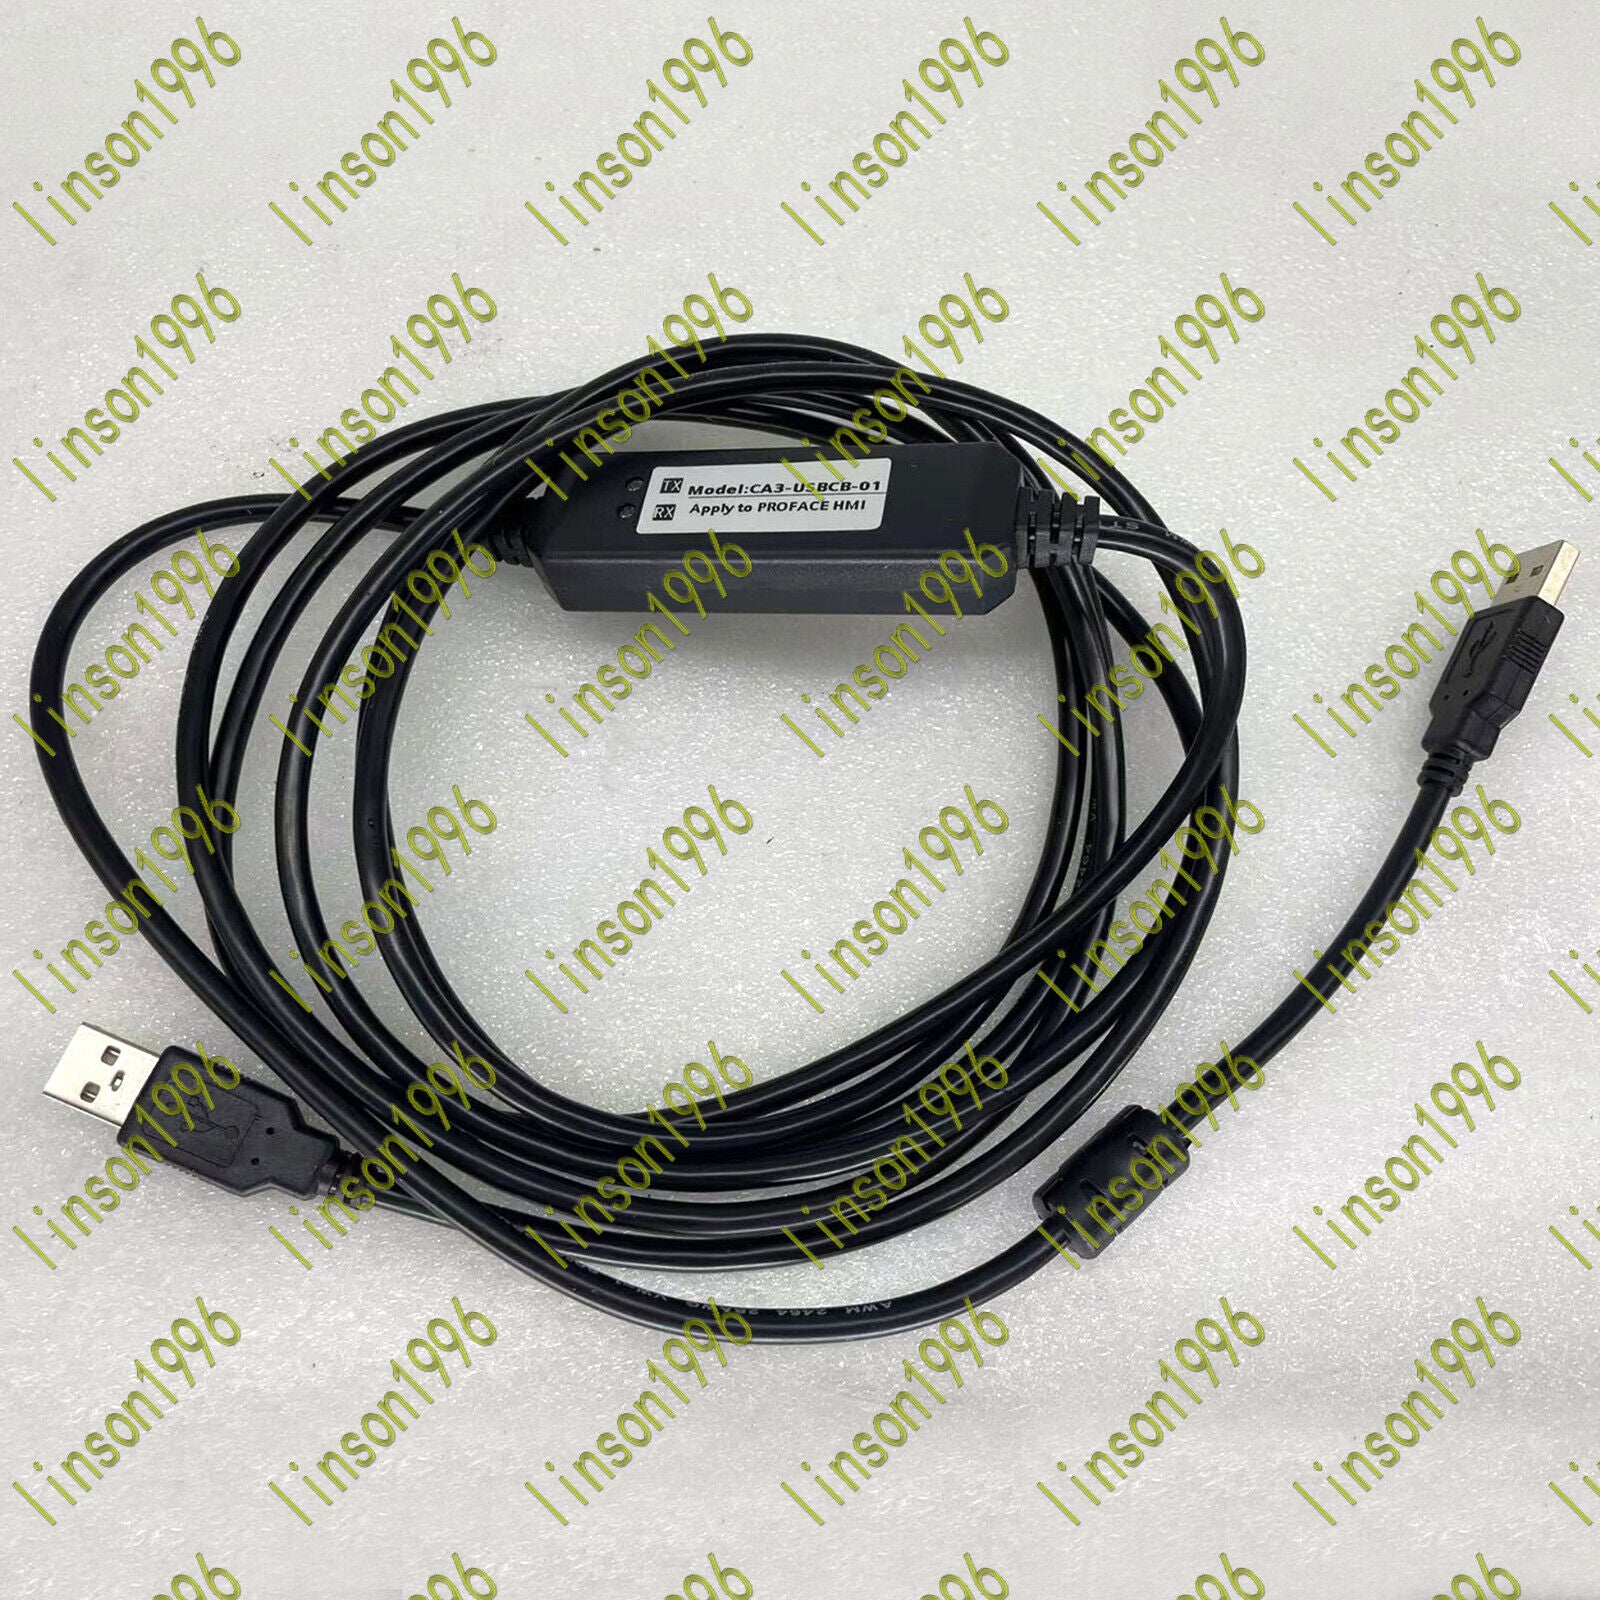 new  for Pro-face CA3-USBCB-01 HMI Programmable Cable SPOT STOCK